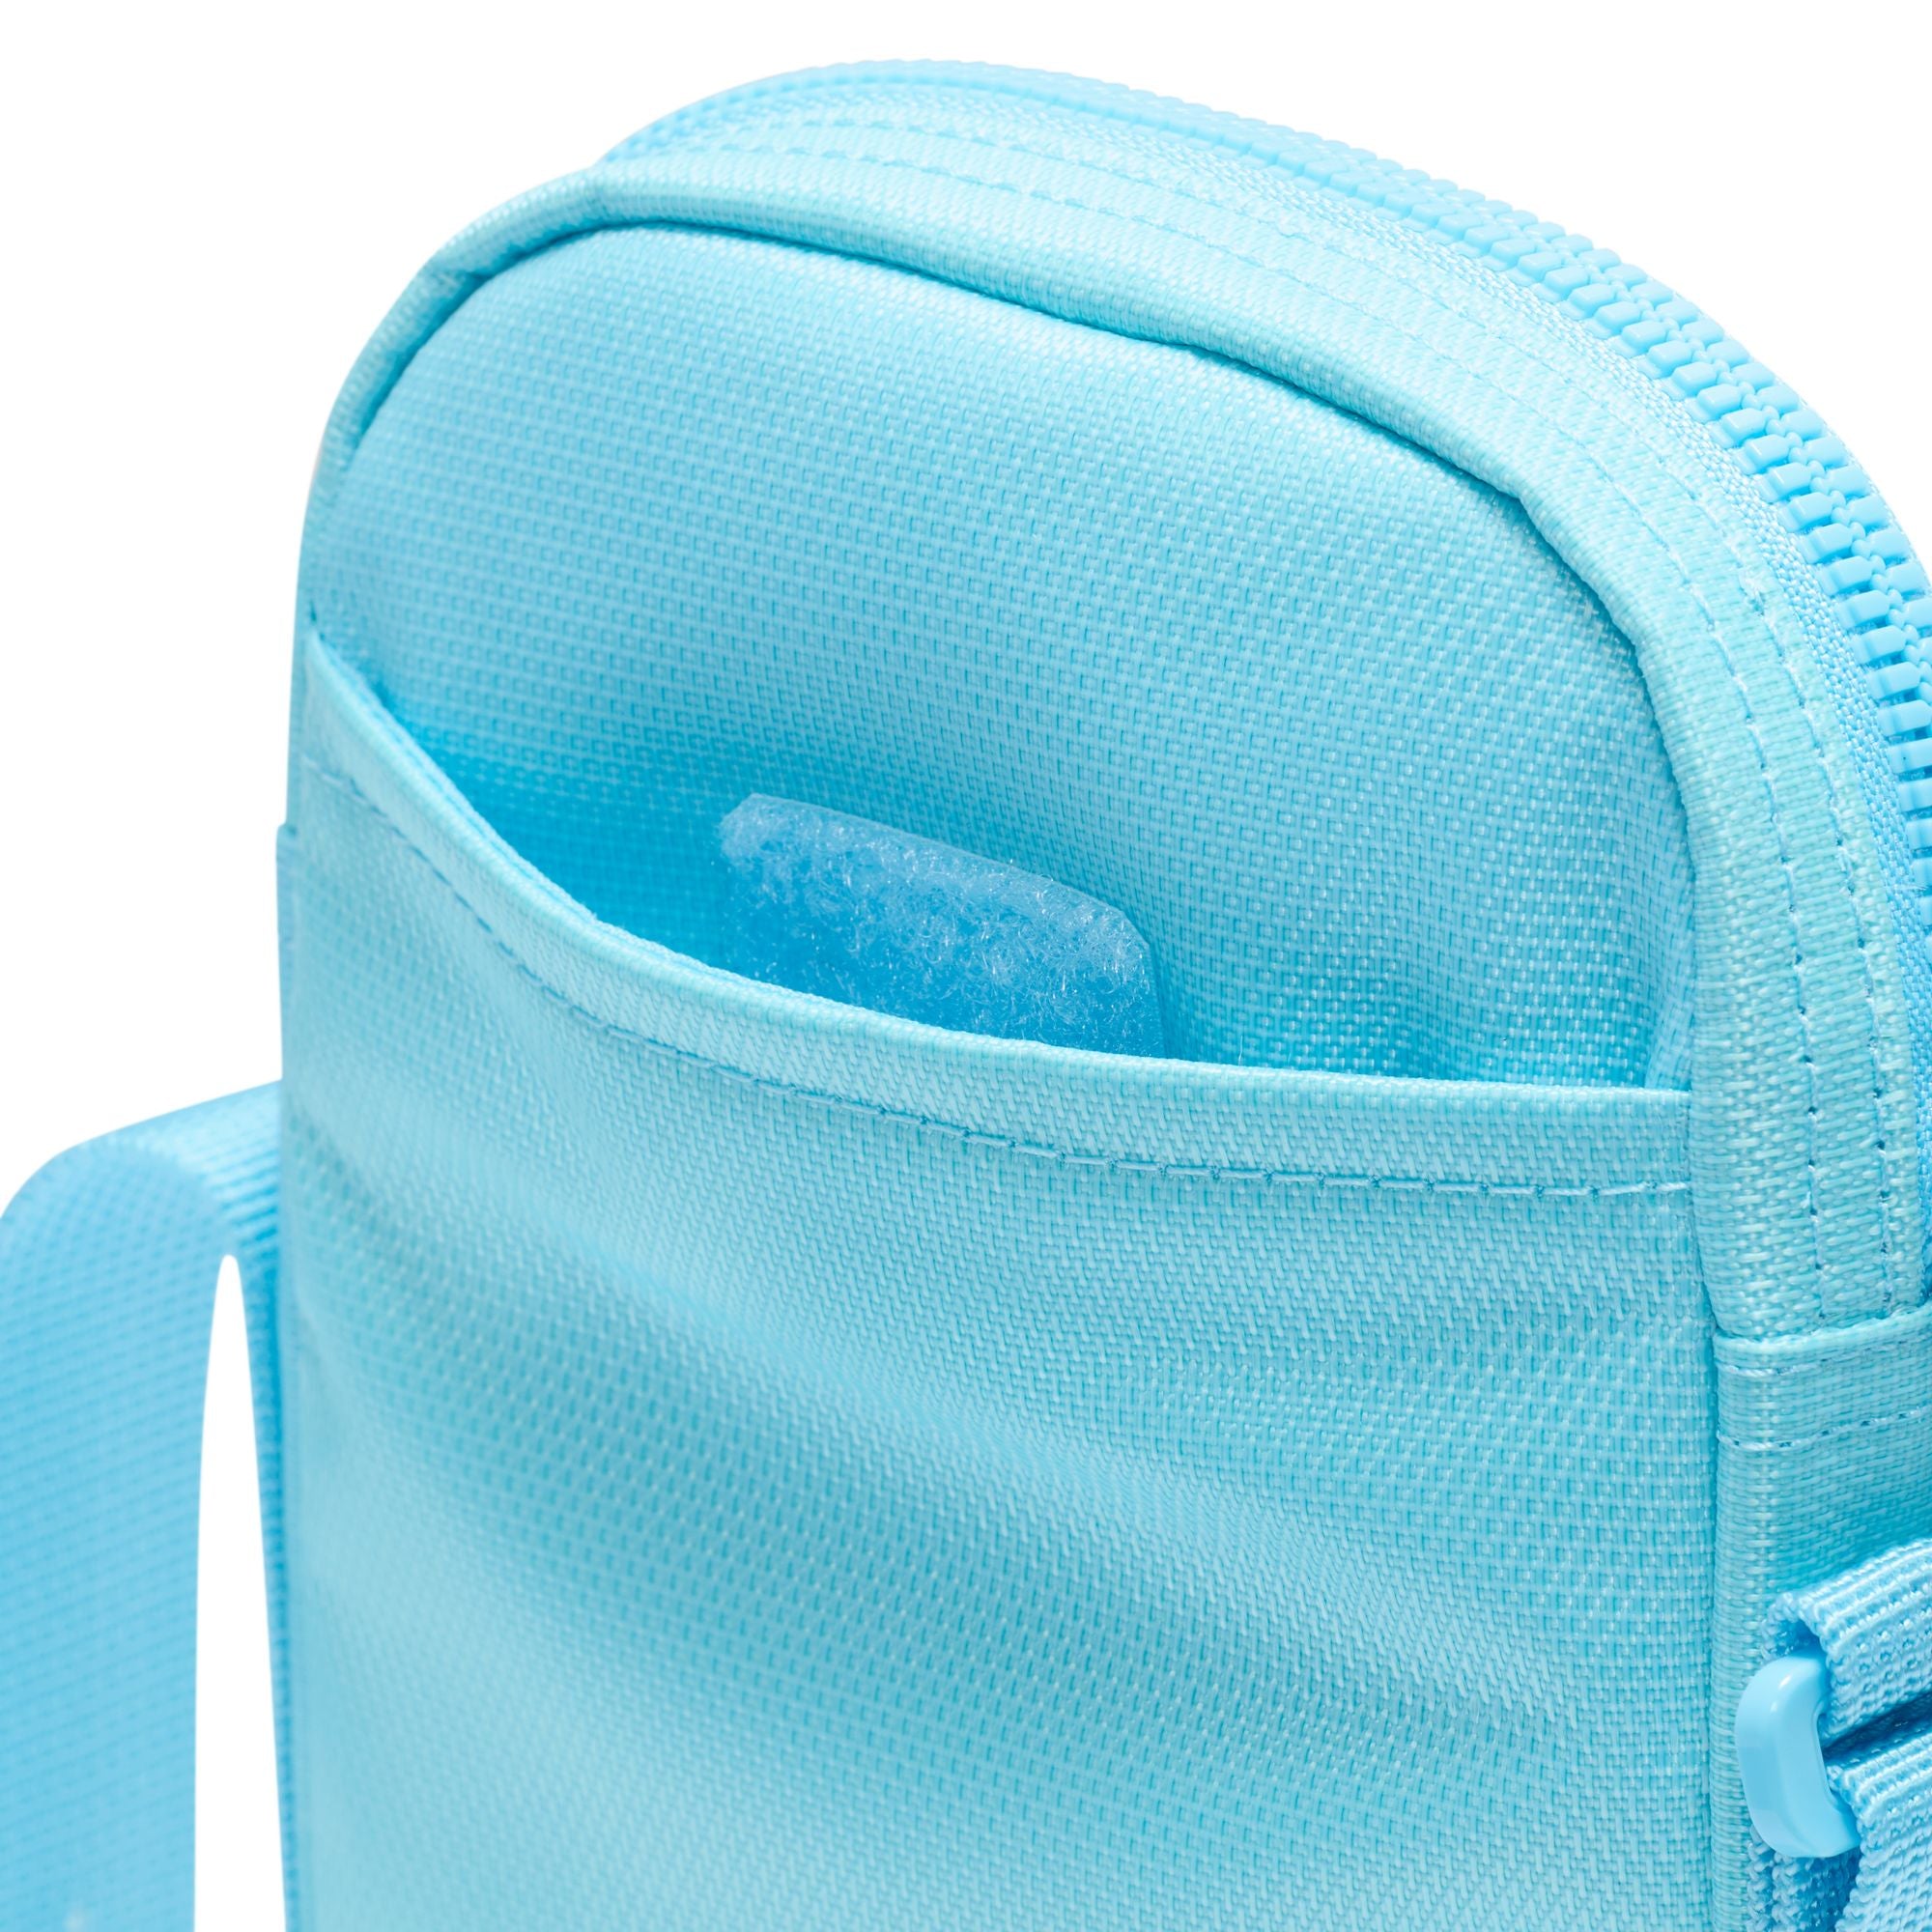 Light blue nike crossbody bag with mesh front pocket and white nike swoosh logo. Free uk shipping over £50